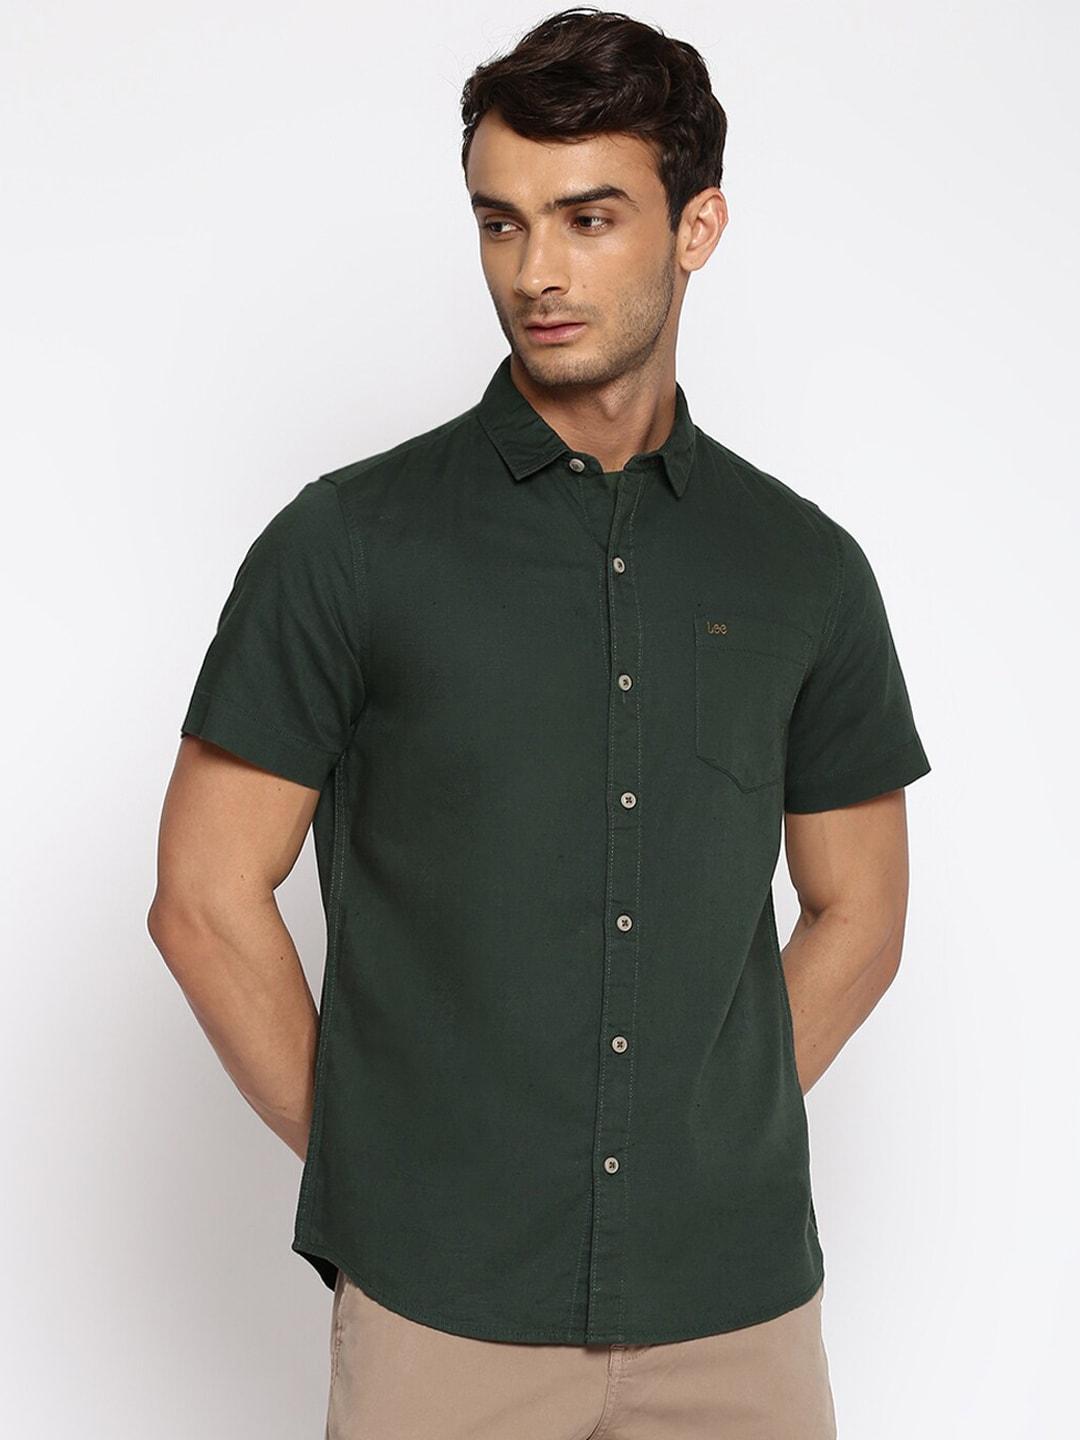 lee-men-olive-green-classic-slim-fit-casual-shirt